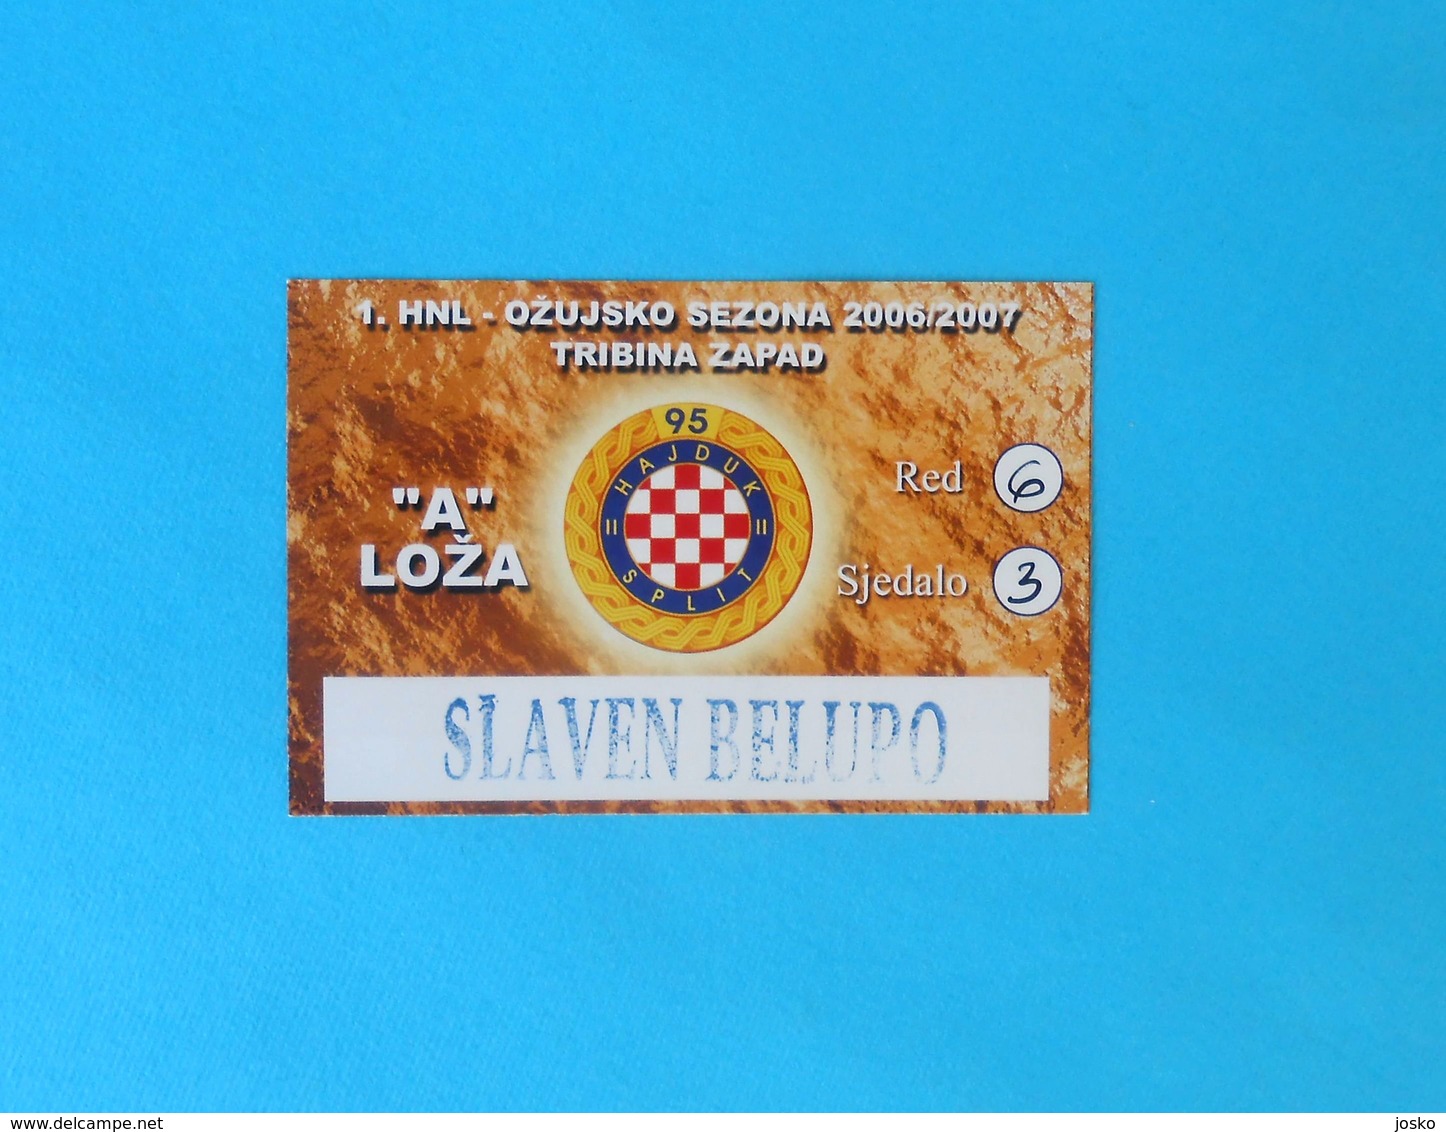 HAJDUK V SLAVEN BELUPO - 2006/07. Croatia Premier League Football Match VIP Ticket * Soccer Fussball Calcio Foot Billet - Tickets D'entrée